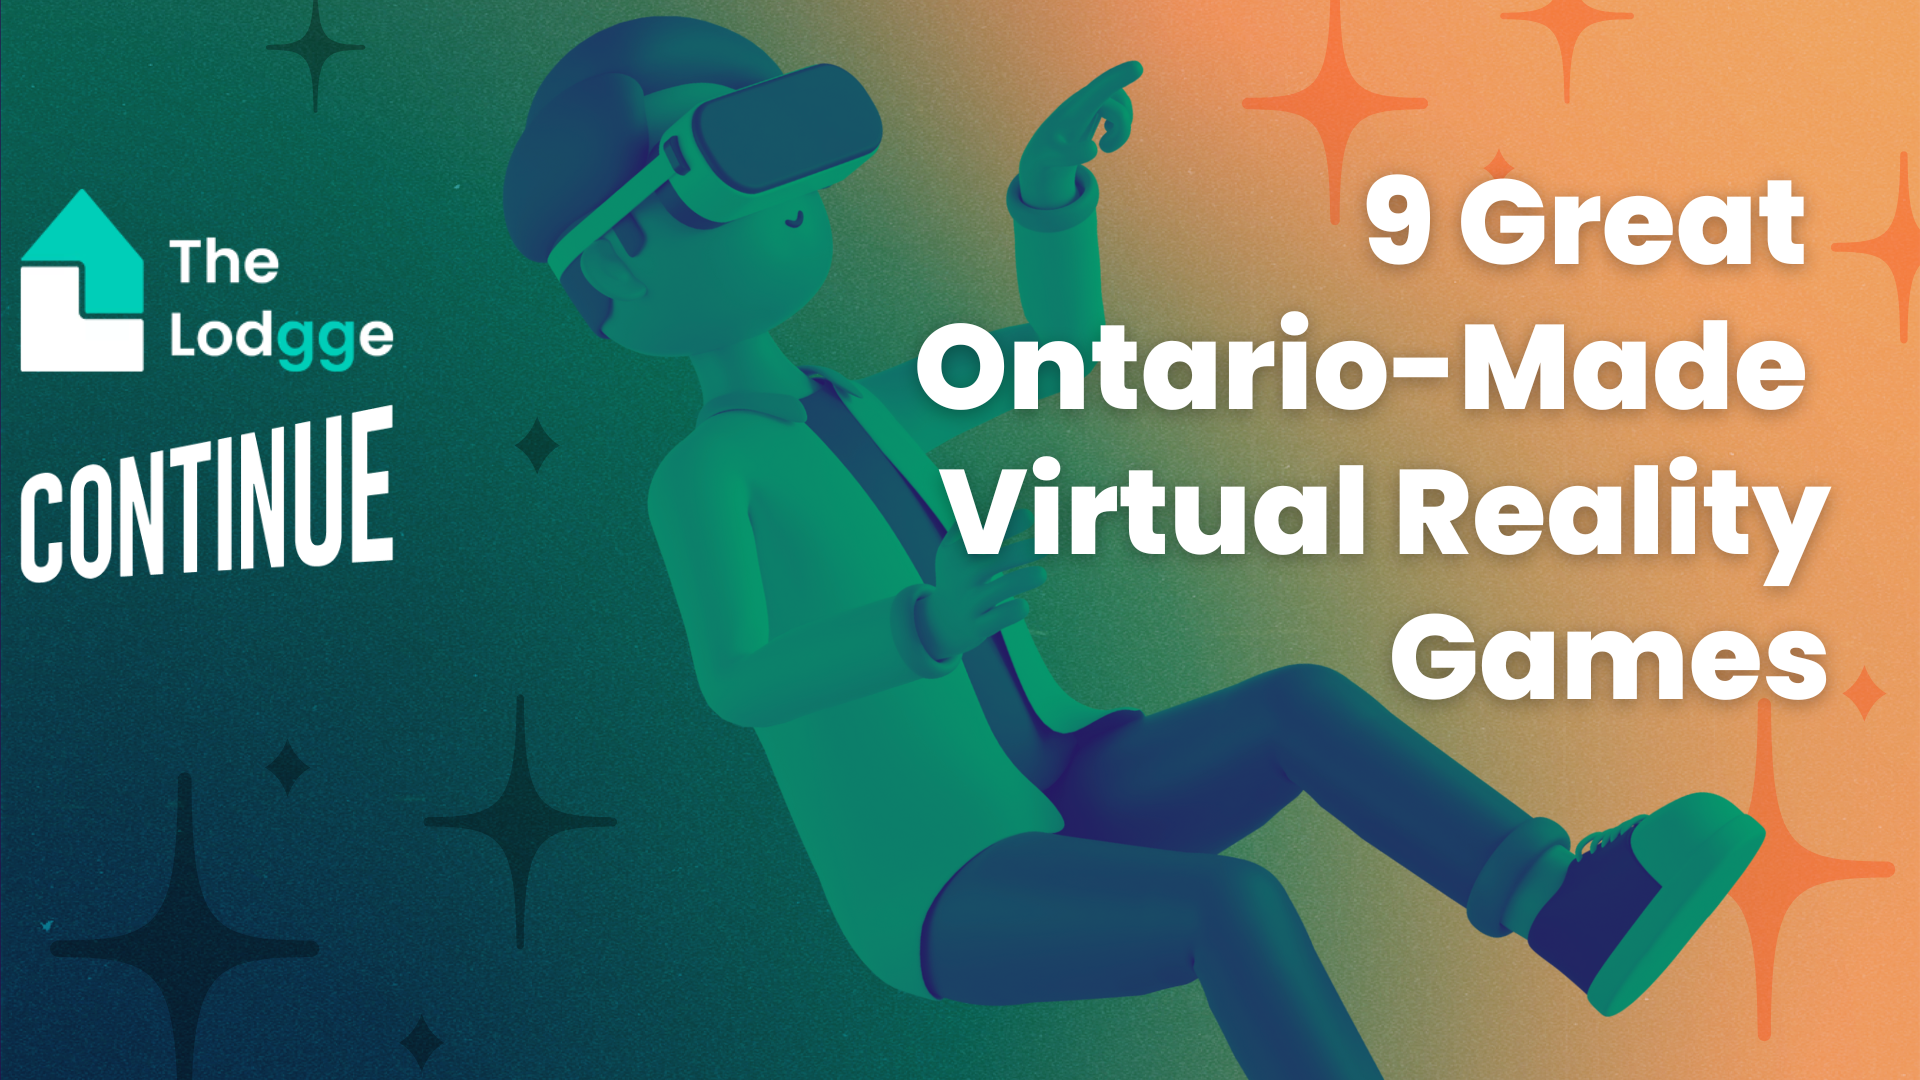 9 Great Ontario-Made Virtual Reality Games